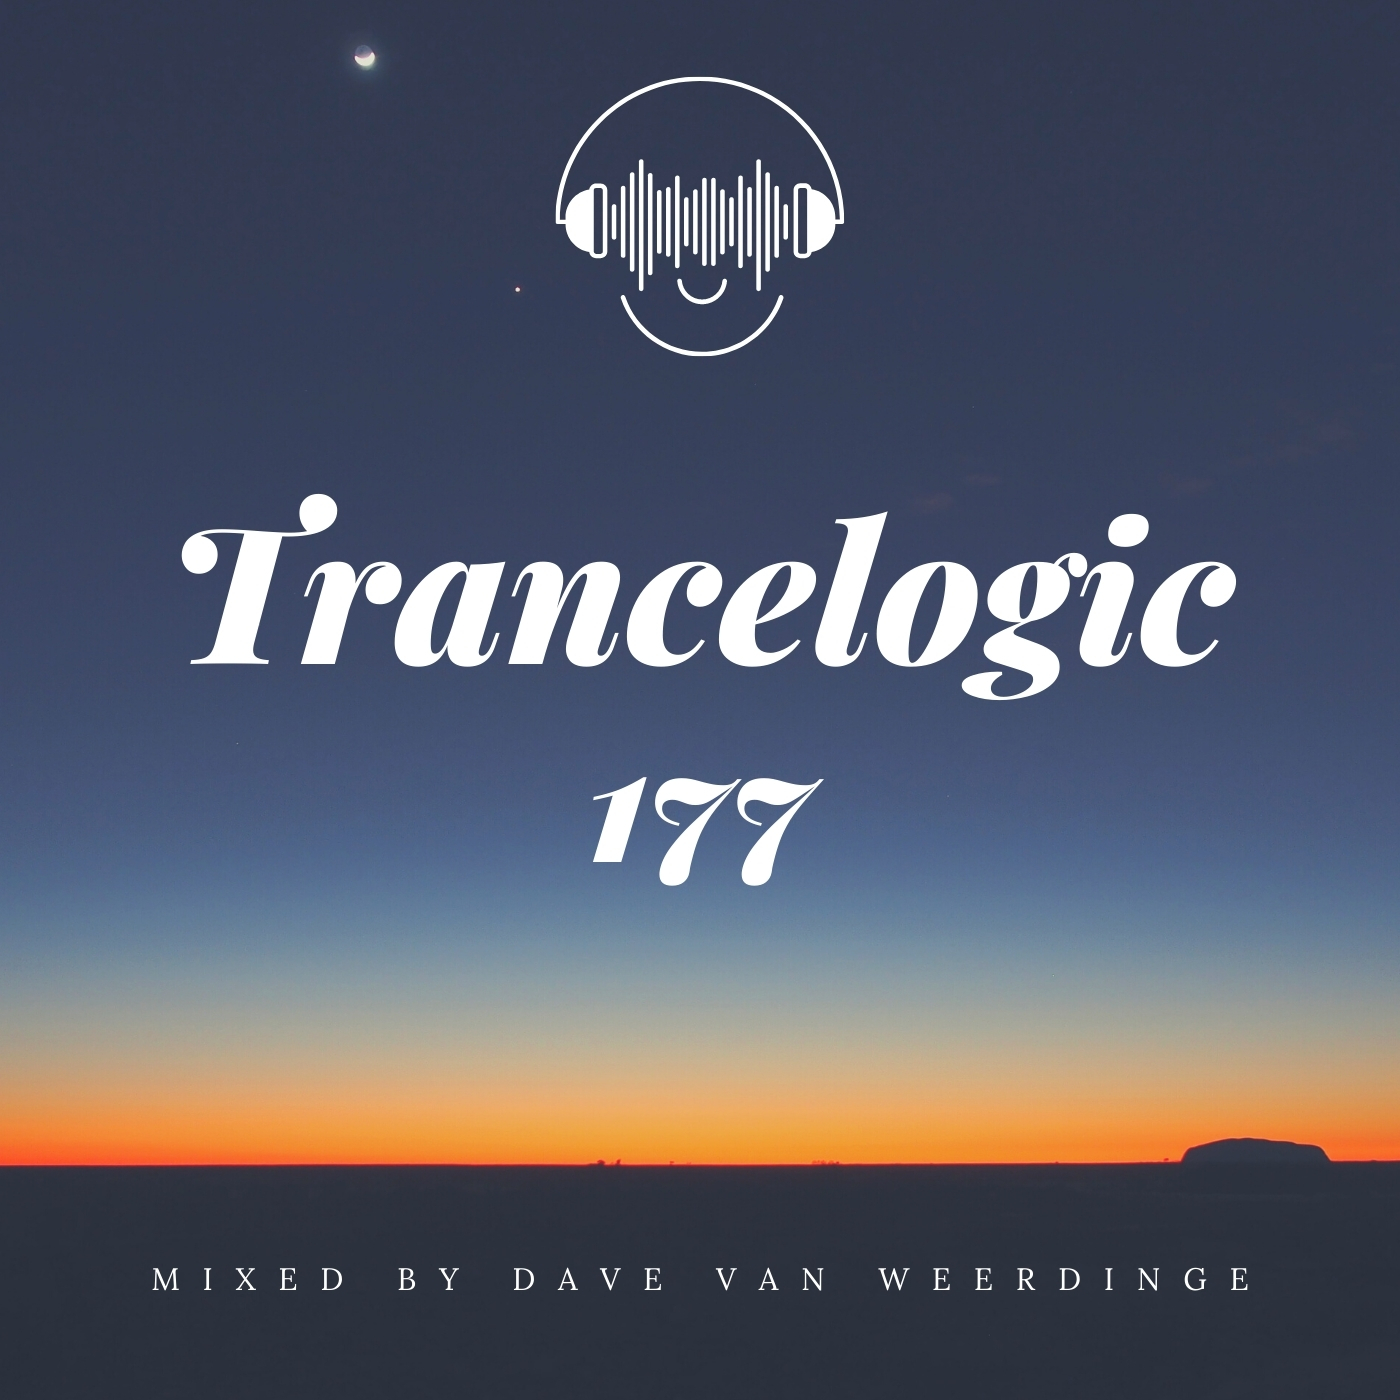 Trancelogic 177 by Dave van Weerdinge